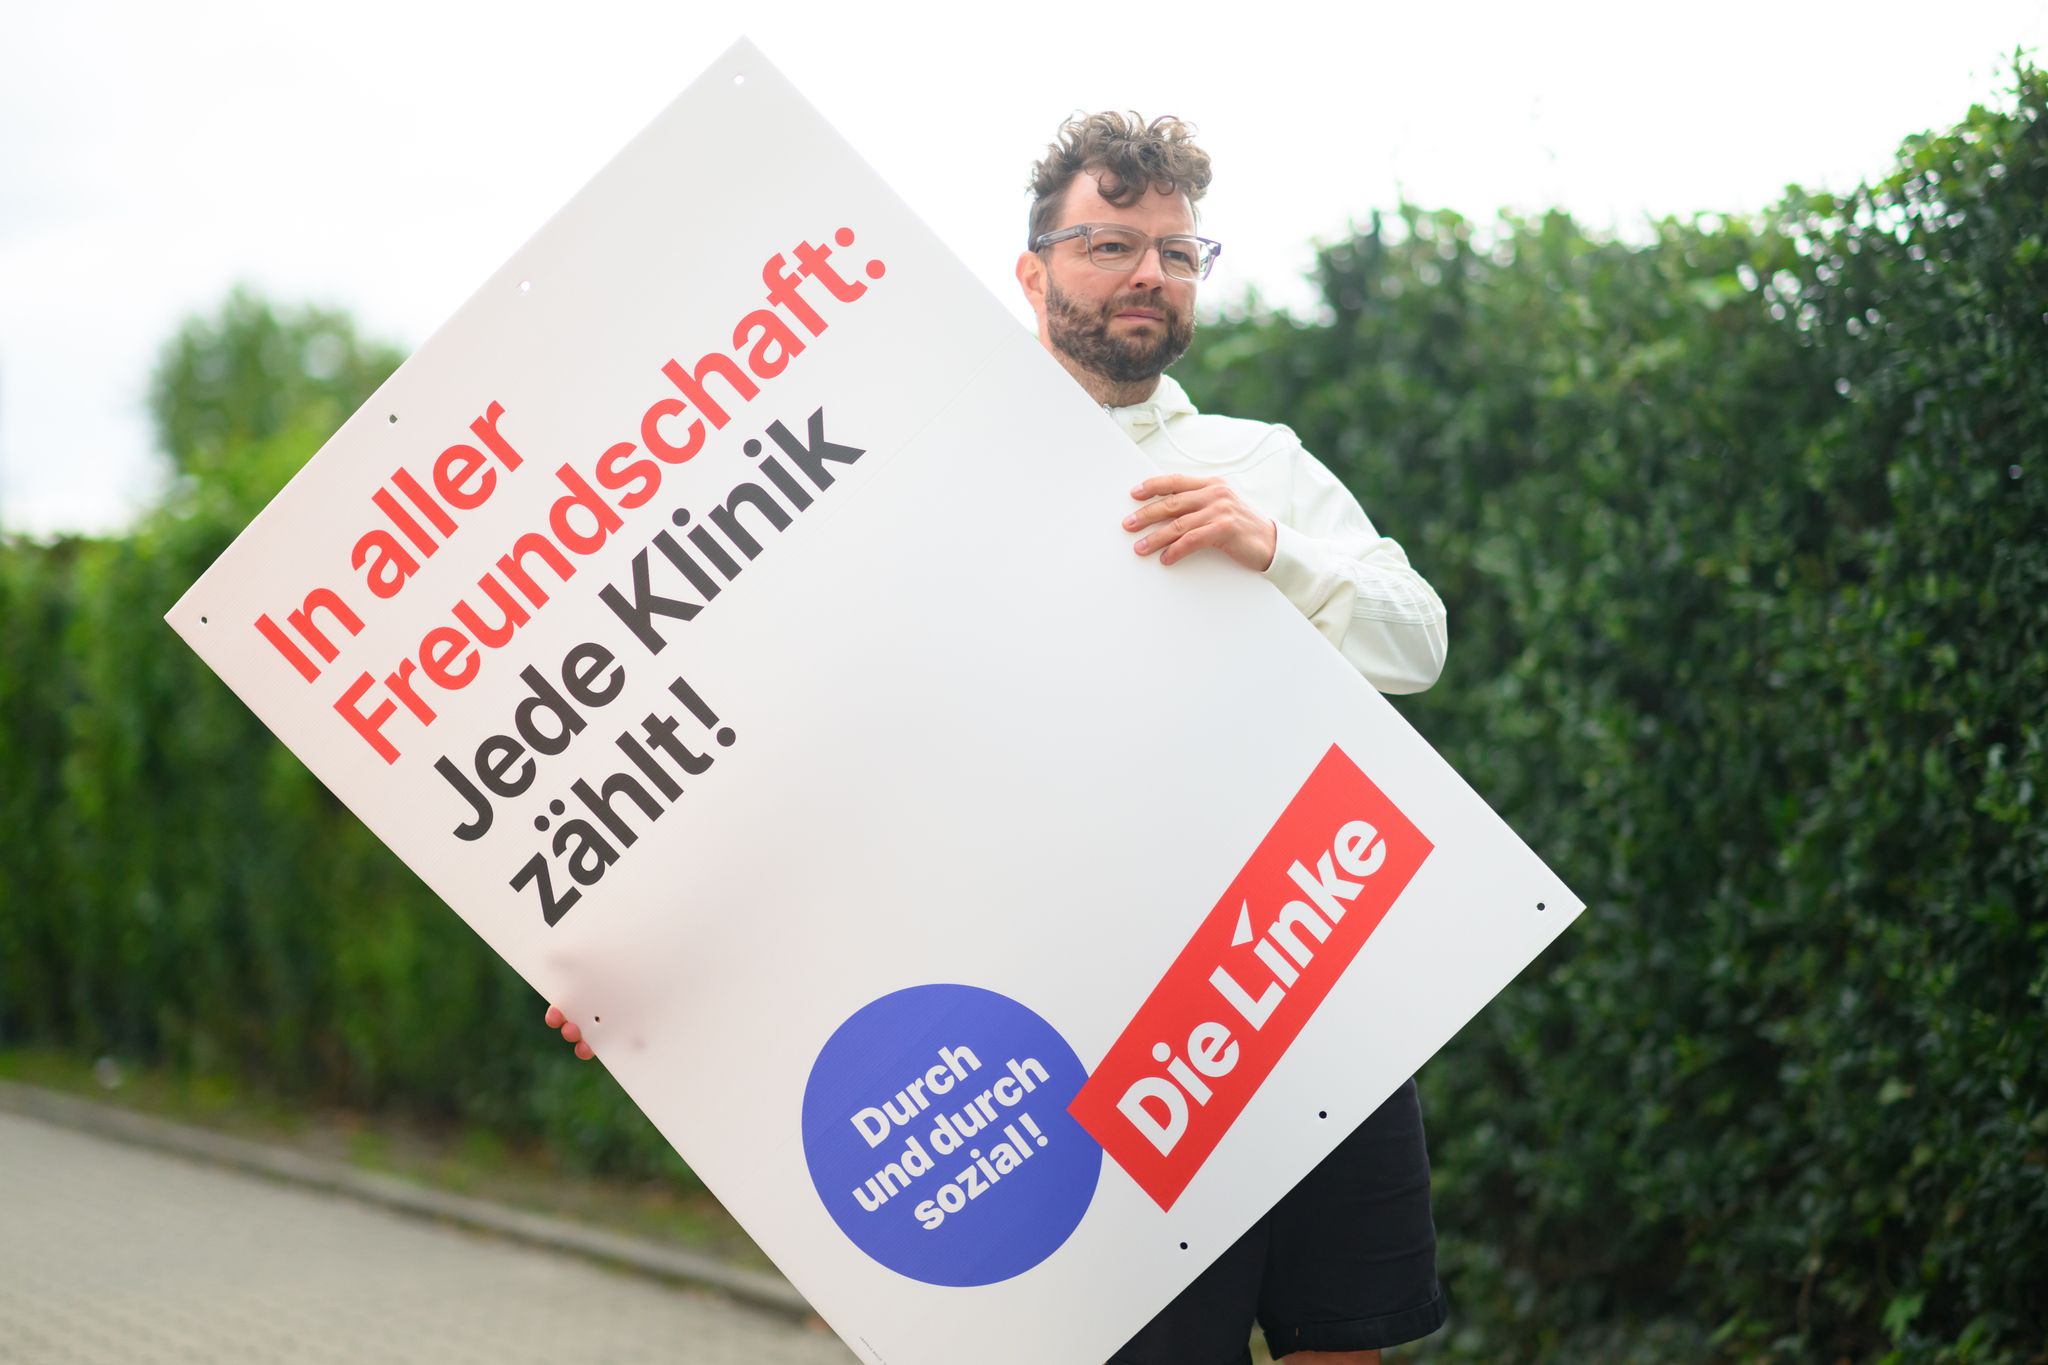 MDR geht gegen Die Linke wegen Wahlplakat vor 
Alles andere als in aller Freundschaft: Der MDR geht juristisch gegen Wahlplakate der schsischen Linken vor. Robert Michael/dpa  DPA